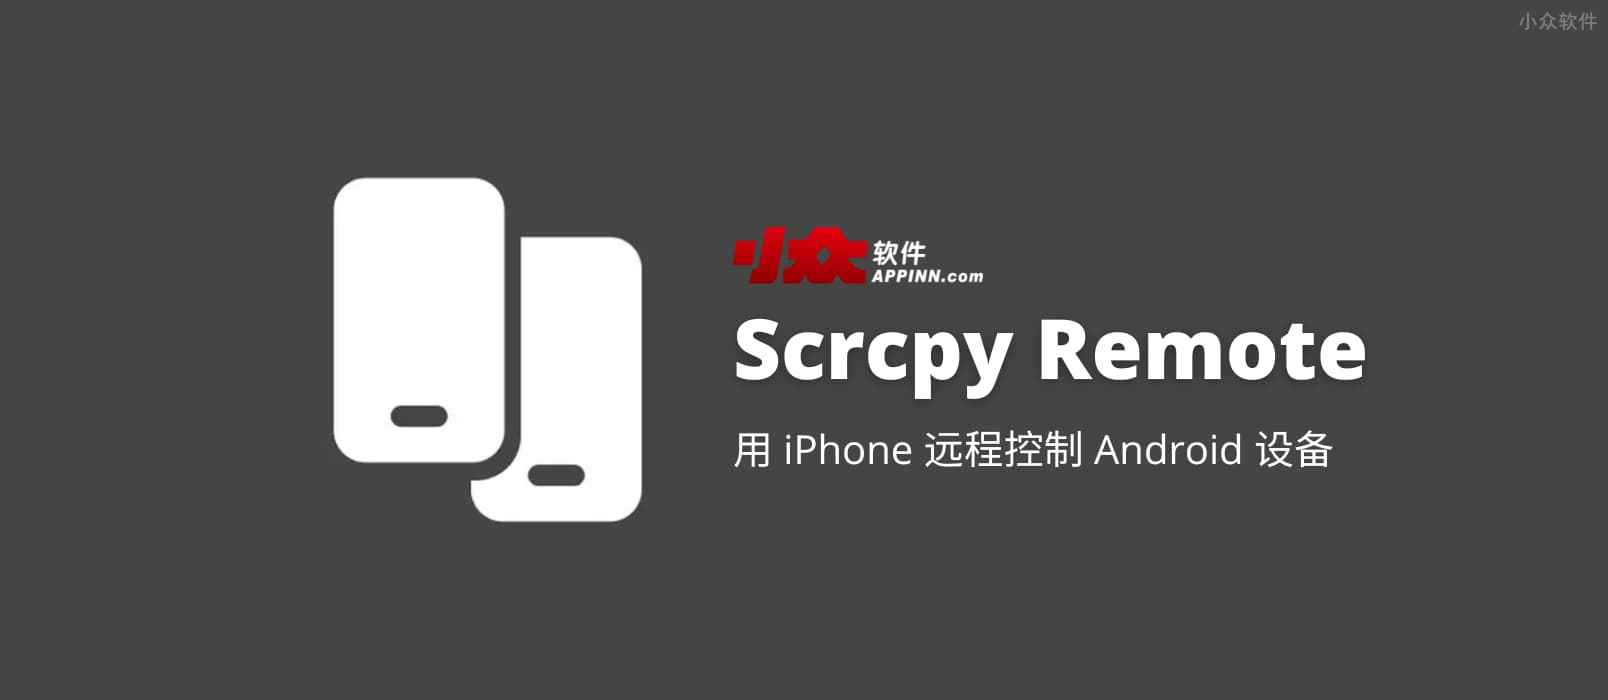 Scrcpy Remote – 用 iPhone 远程控制 Android 设备[iOS]